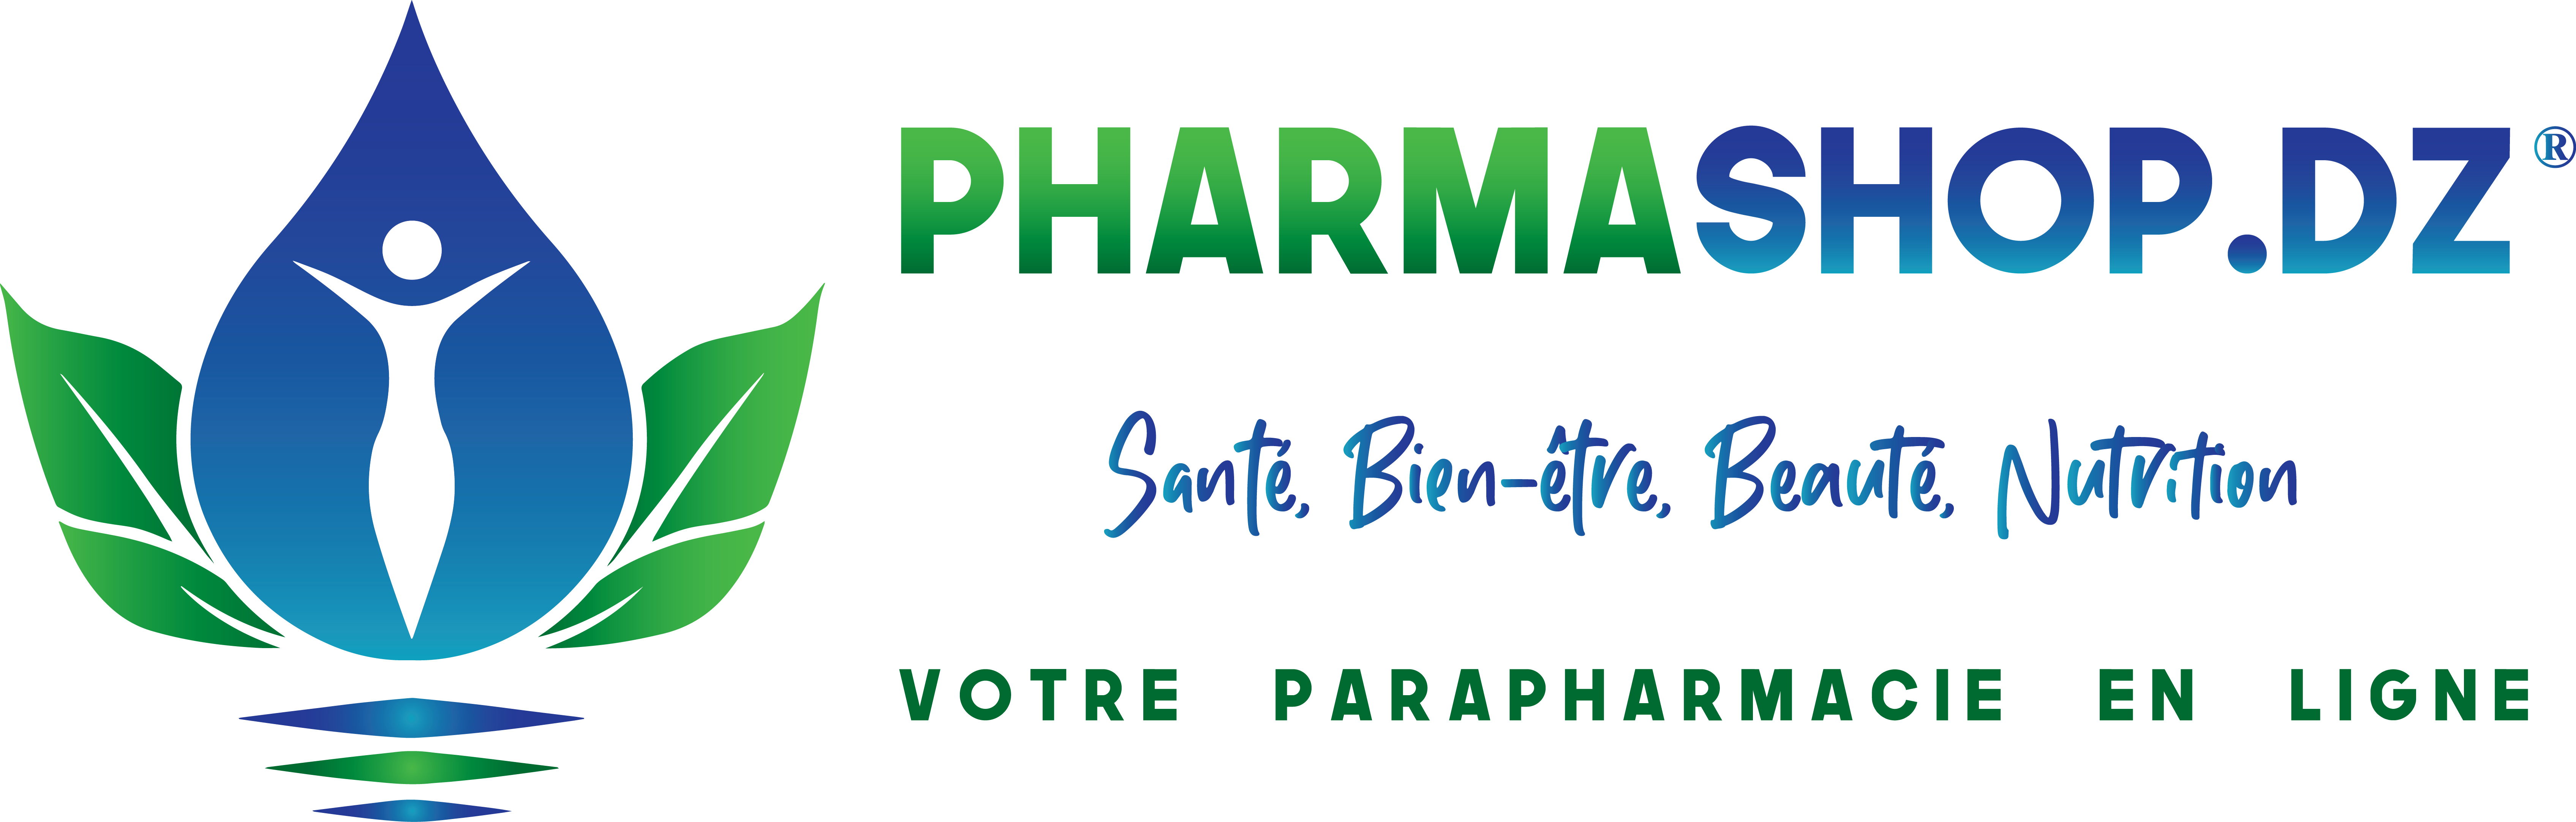 Pharmashop.dz ® n°1 de la parapharmacie en ligne   